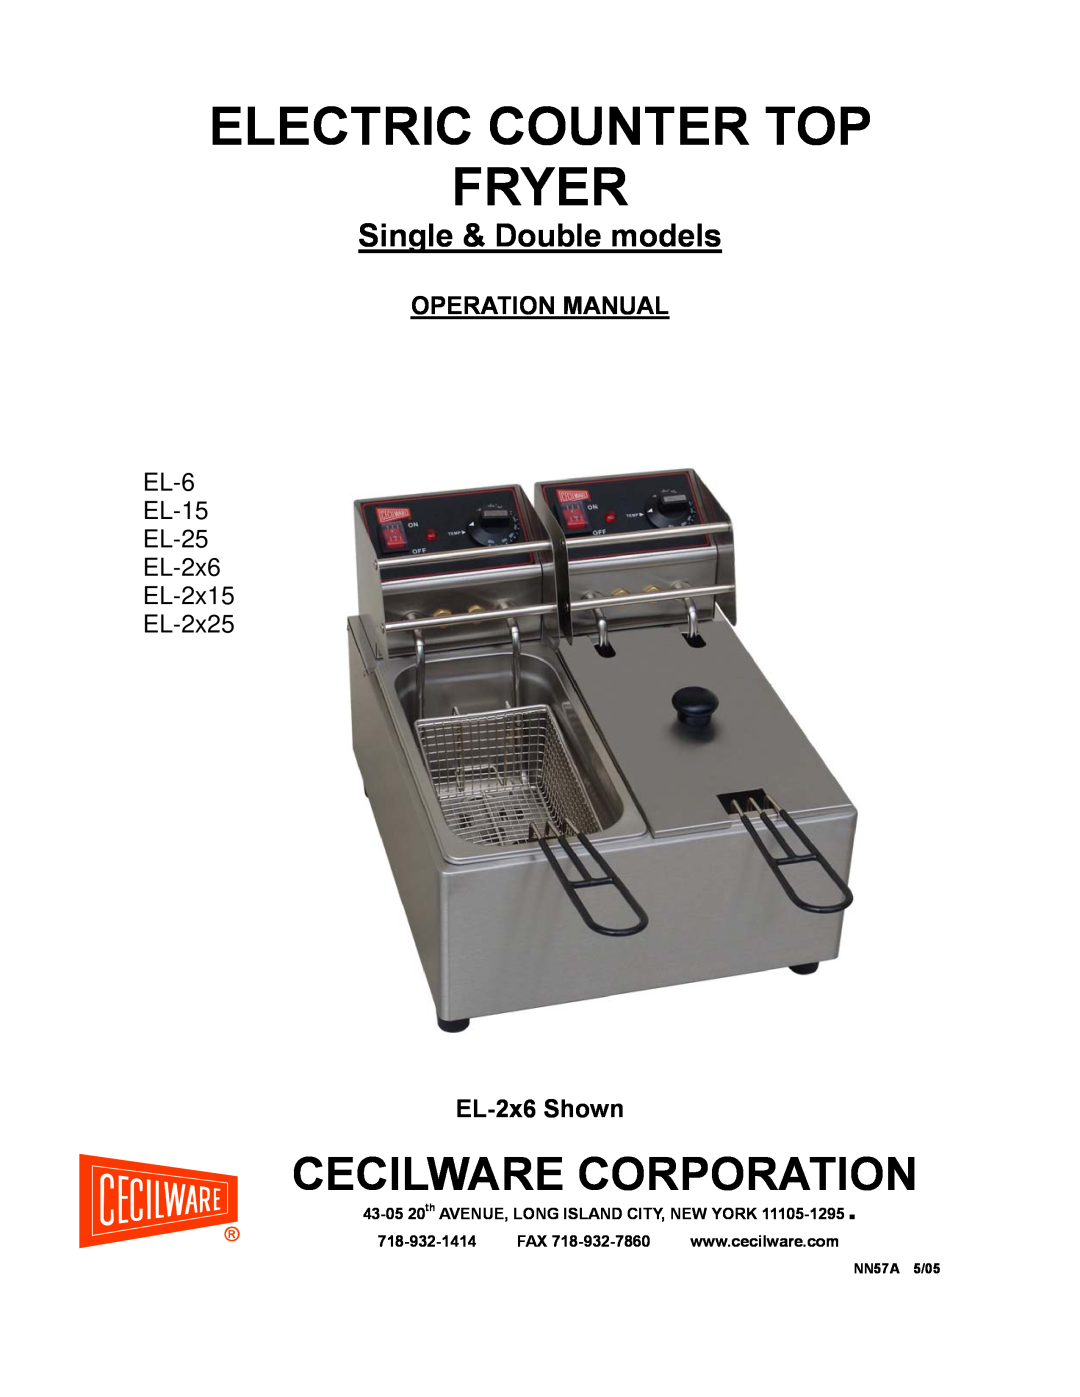 Cecilware EL-2x15 operation manual Cecilware Corporation, Electric Counter Top Fryer, Single & Double models, EL-2x6Shown 